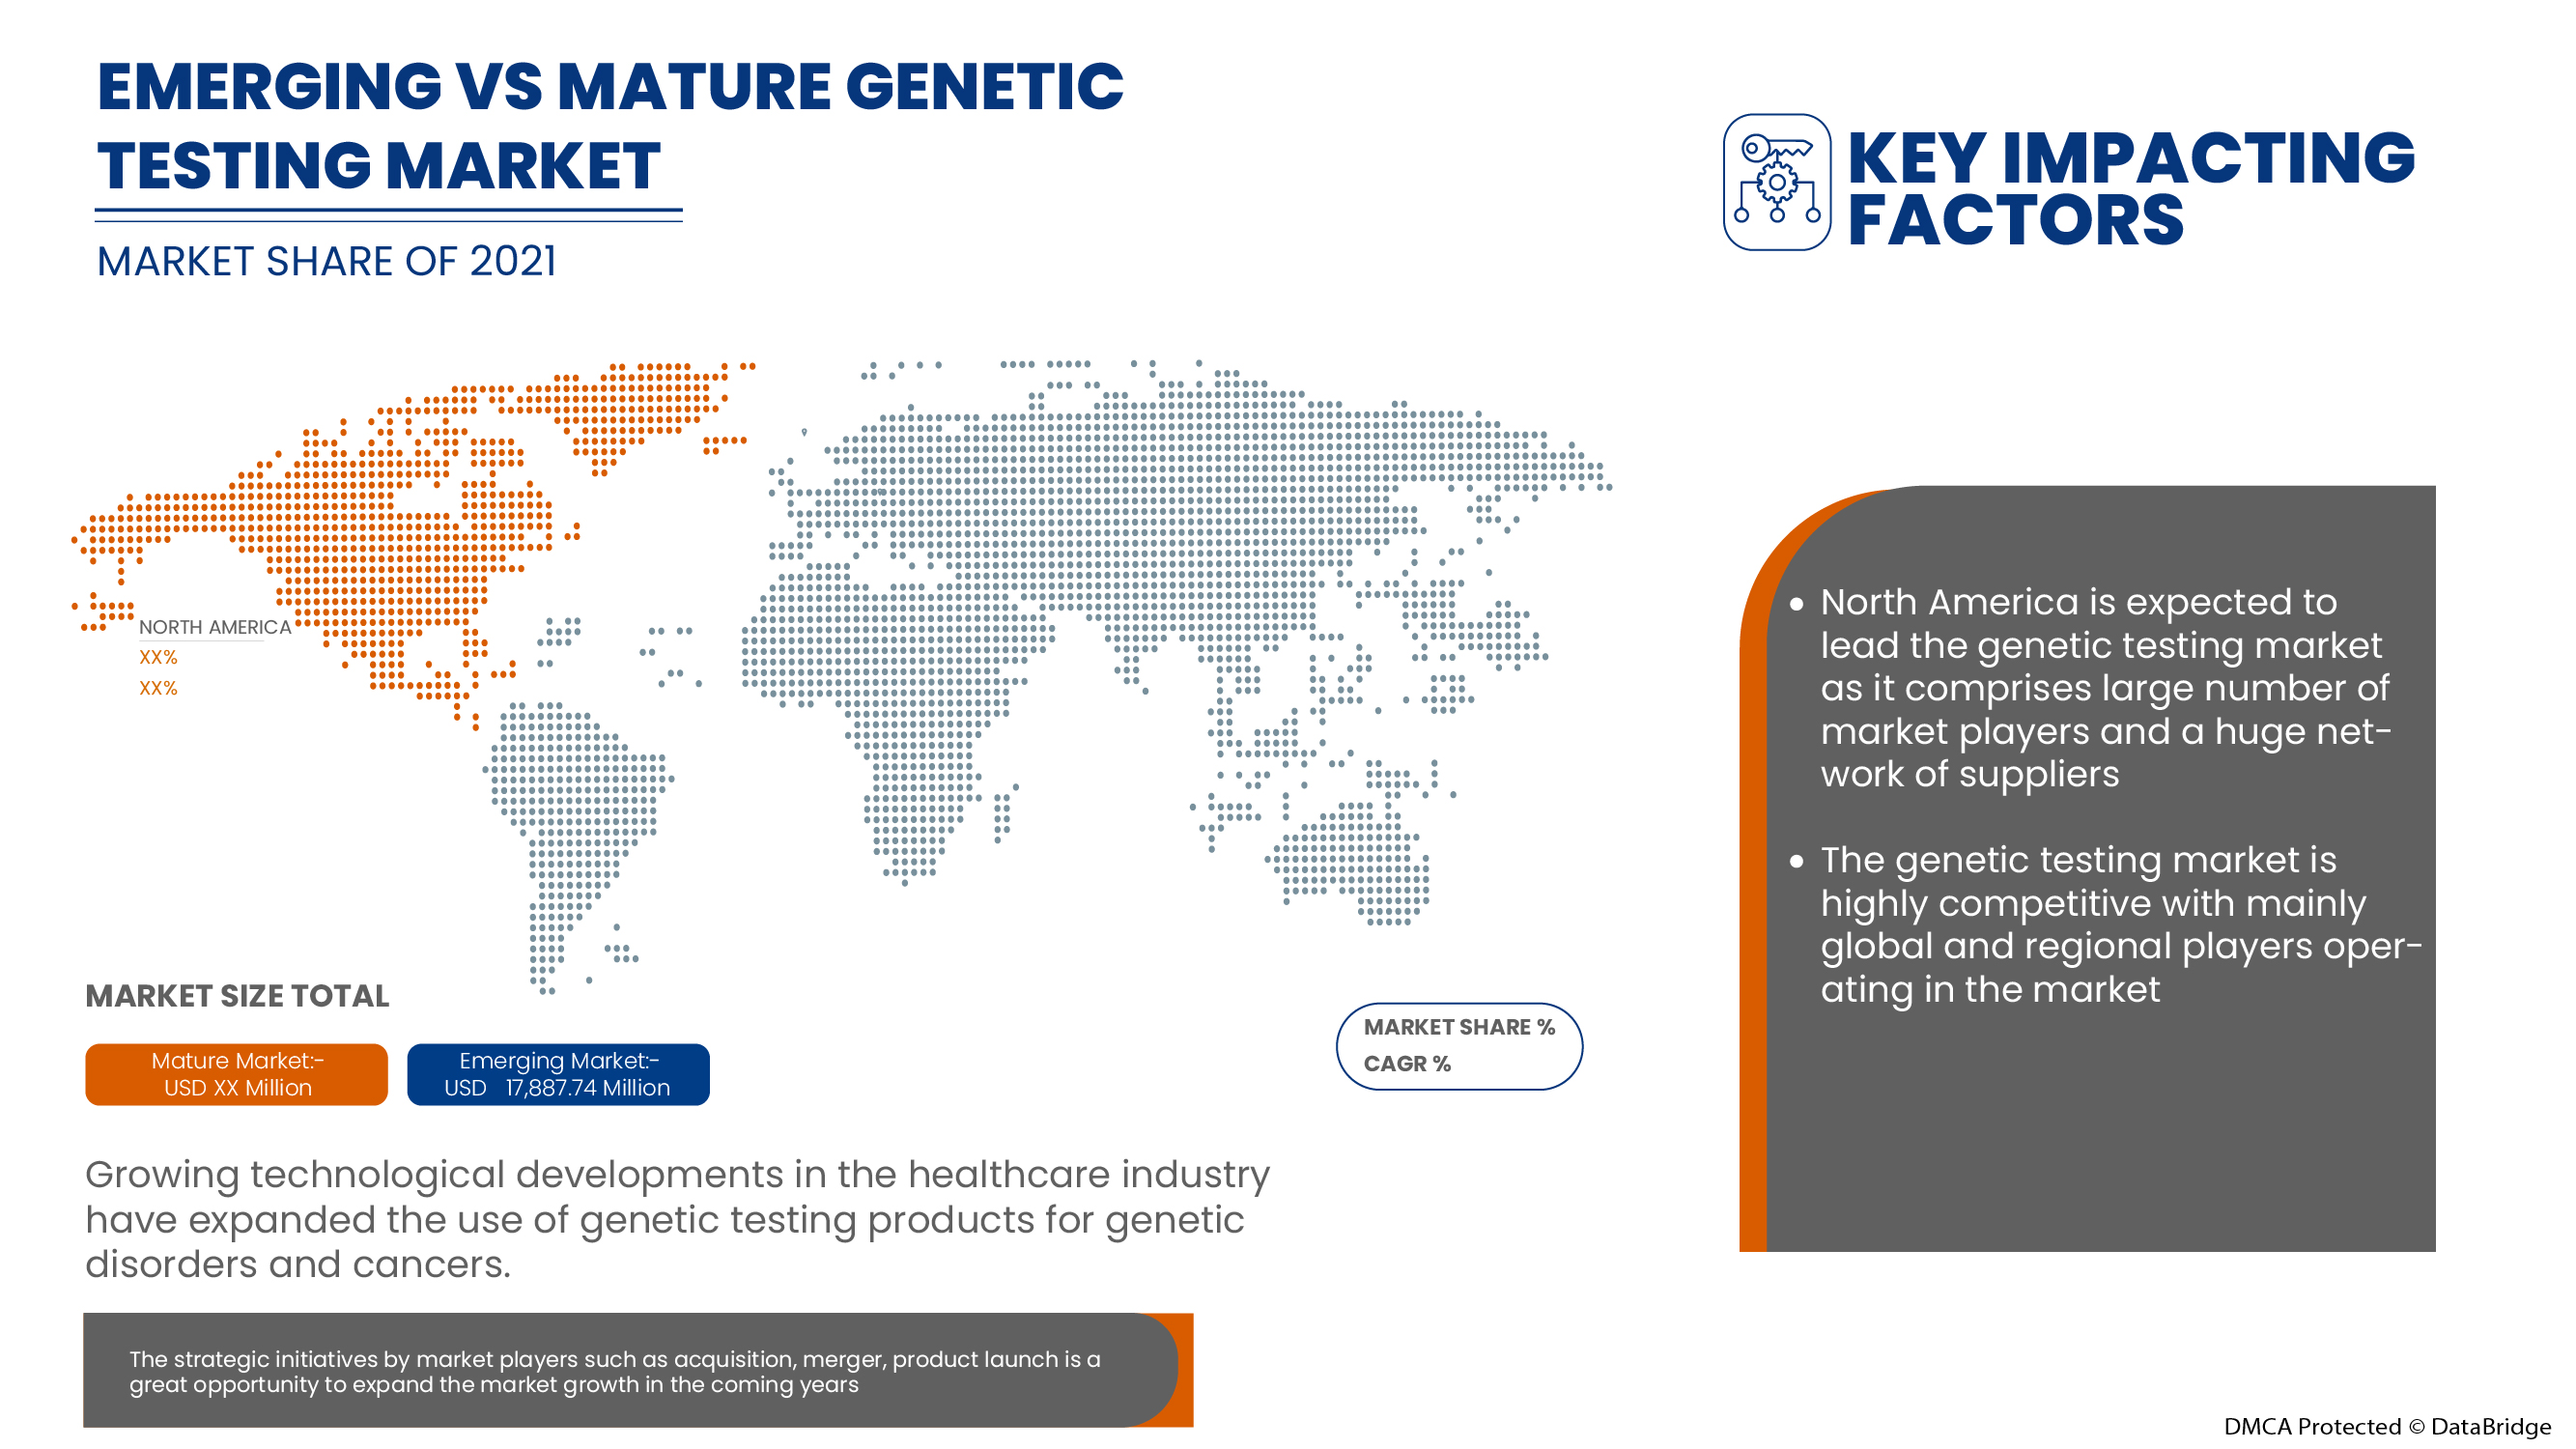 North America Genetic Testing Market